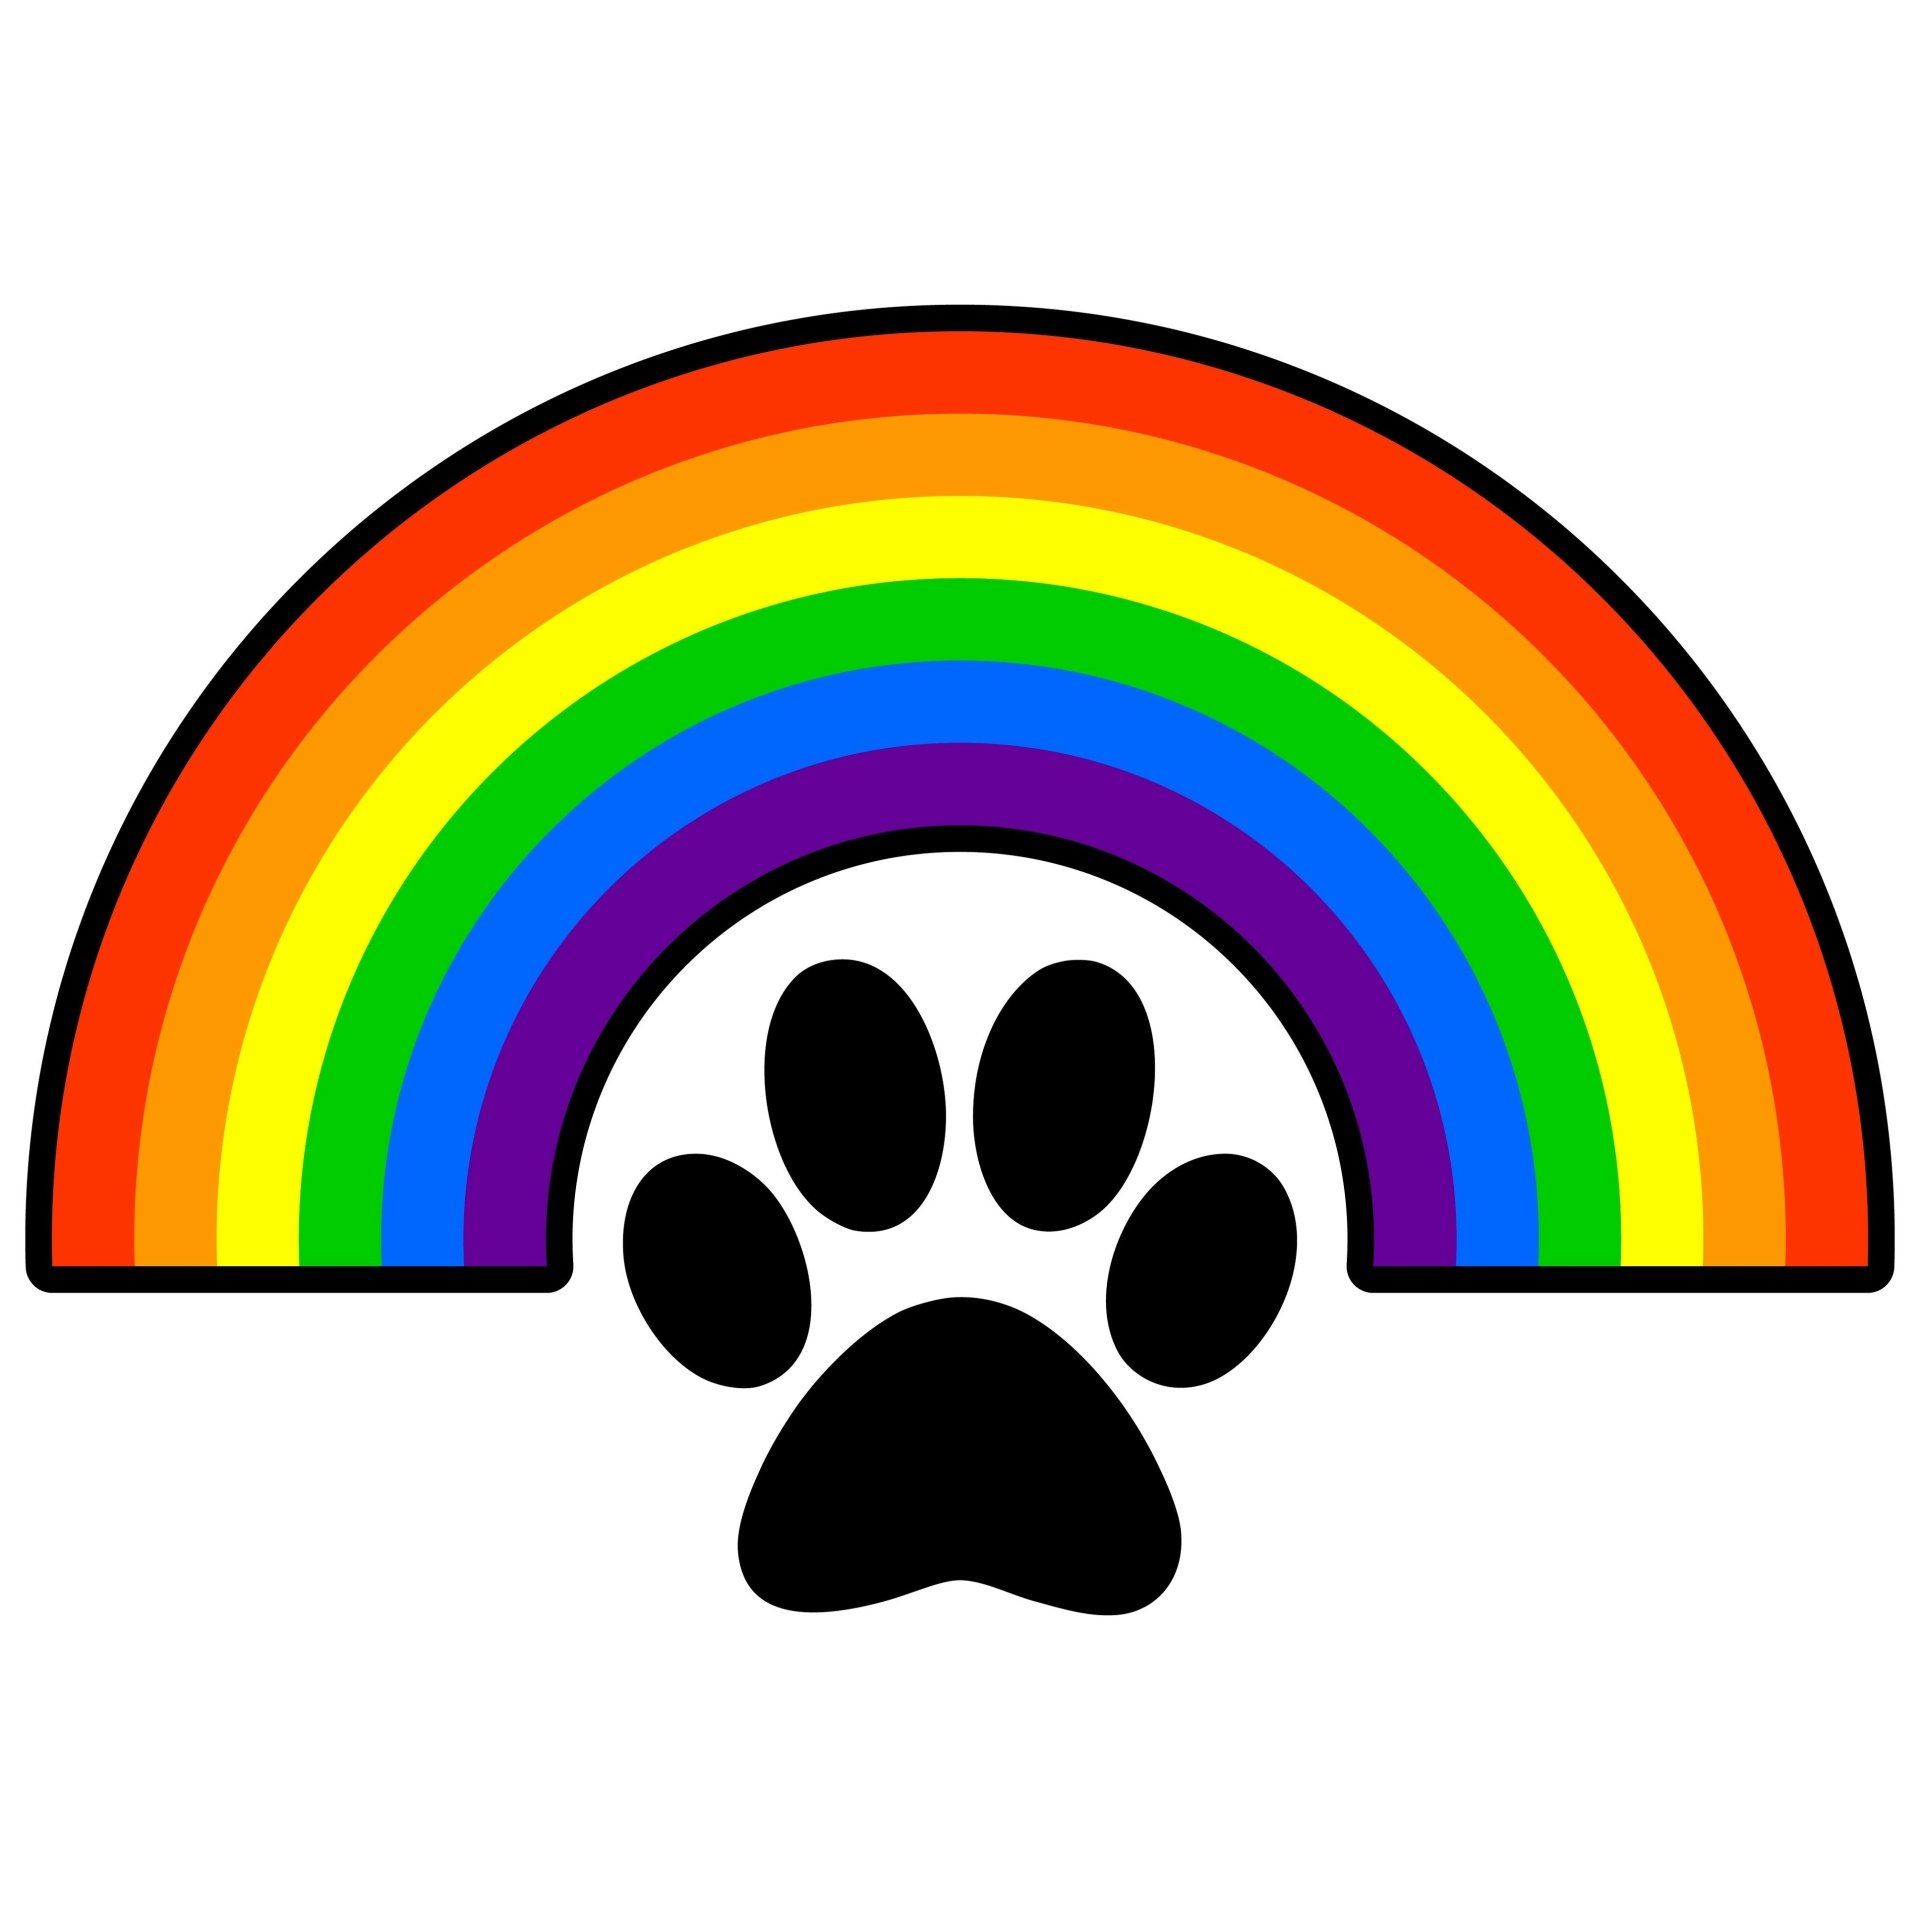 Rainbow illustration with paw